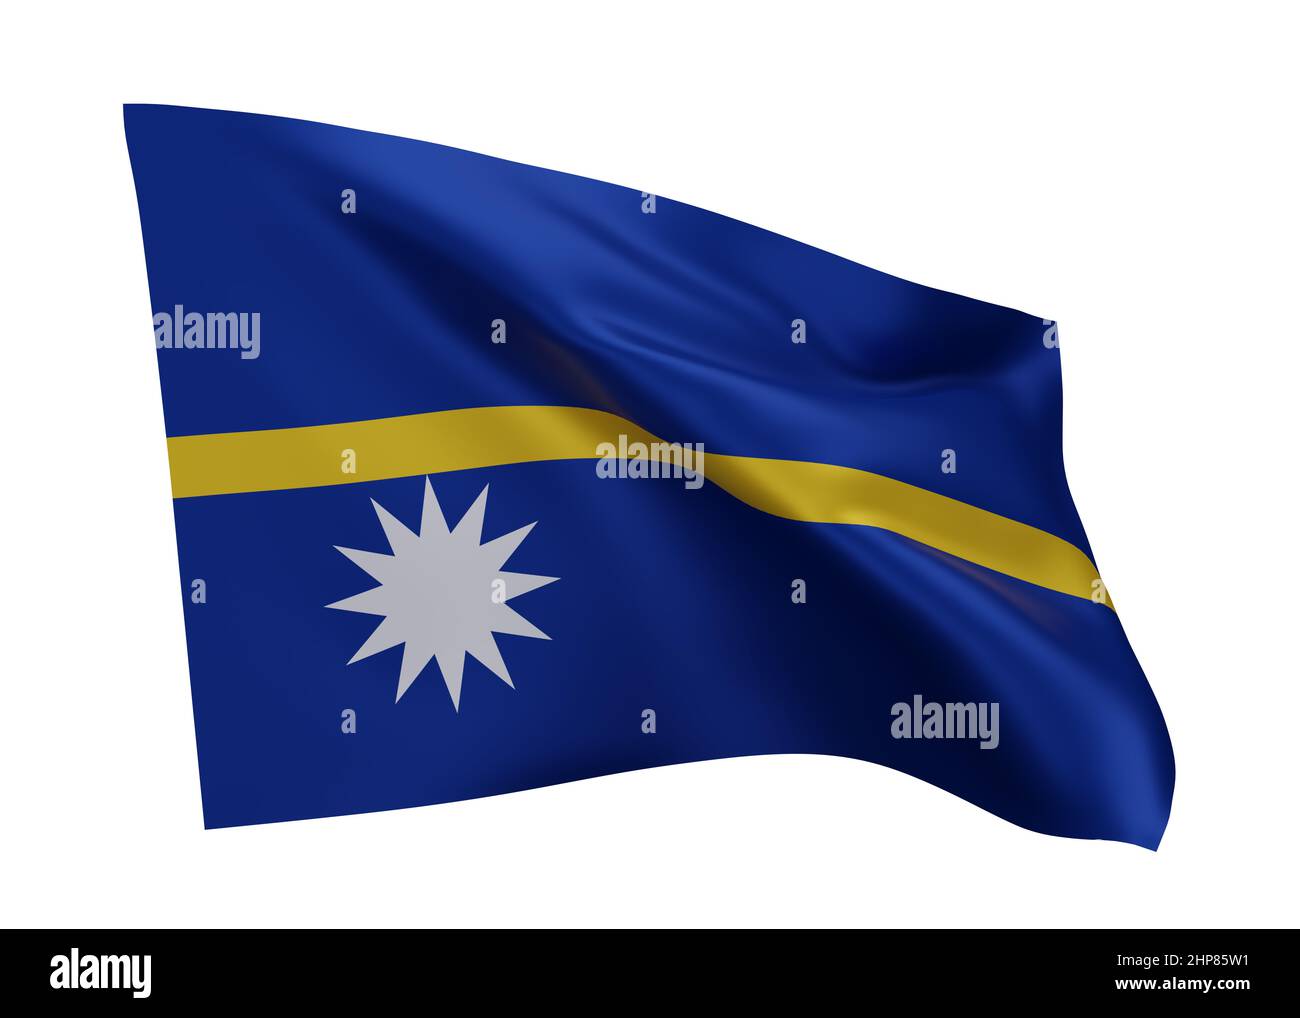 3d illustration flag of Republic of Nauru. Nauru high resolution flag isolated against white background. 3d rendering Stock Photo